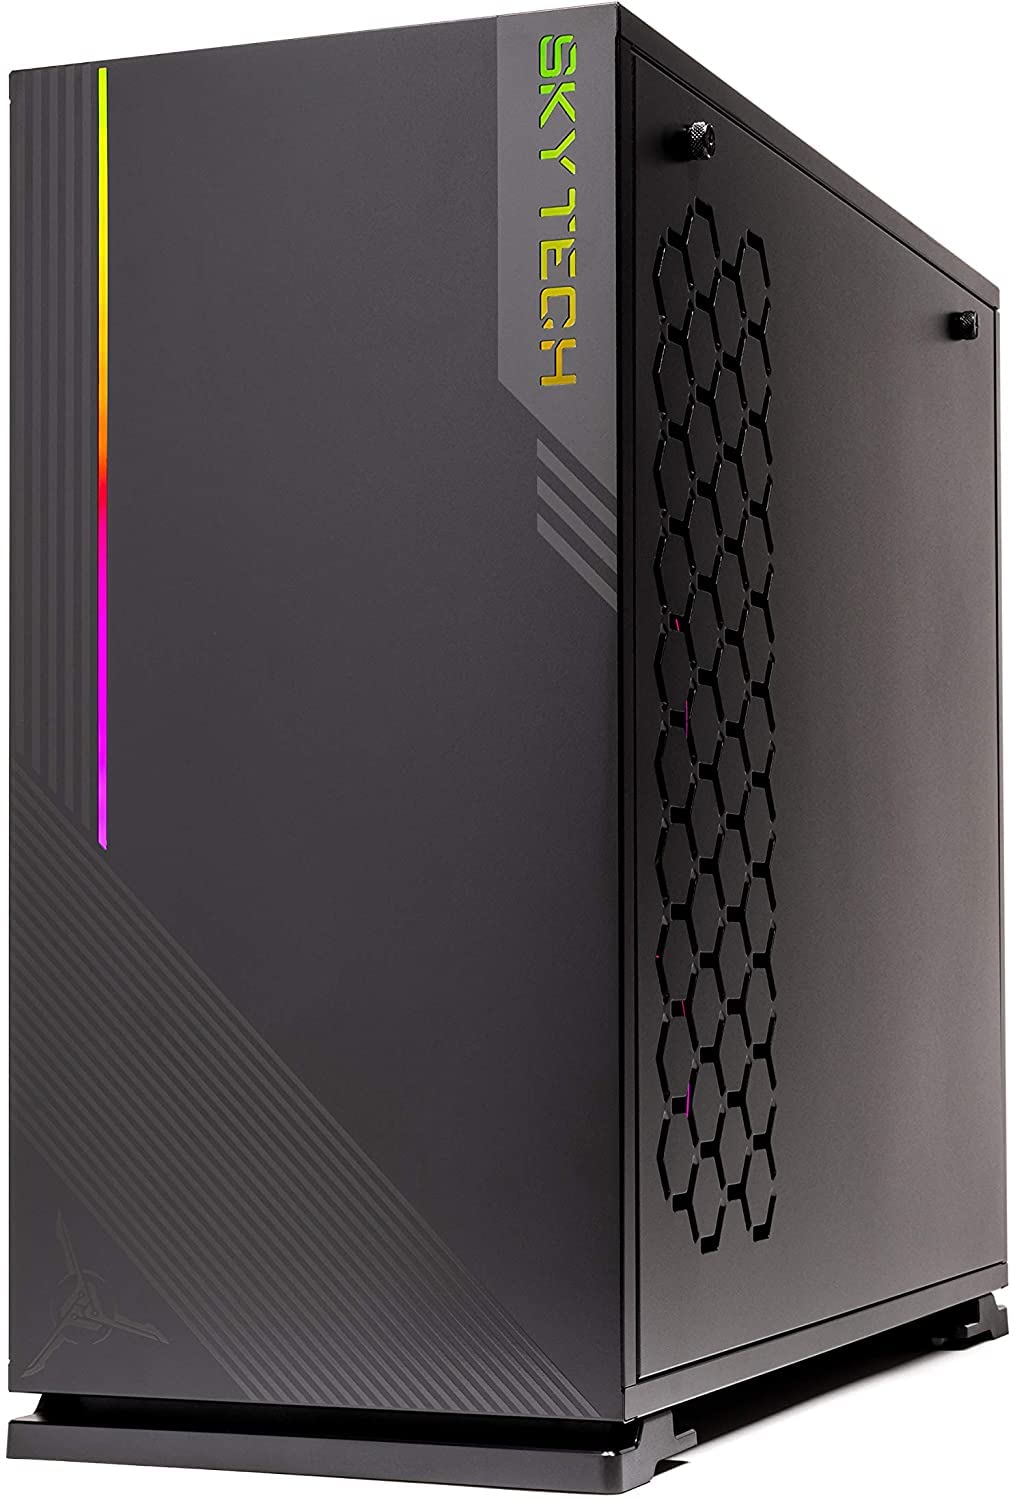 Skytech Azure Gaming PC Desktop - AMD Ryzen 5 5600X 3.8GHz, RTX 3070 8GB, 16GB 3200, 1TB NVME SSD, 650W Gold PSU, Windows 10 Home 64-bit, Black